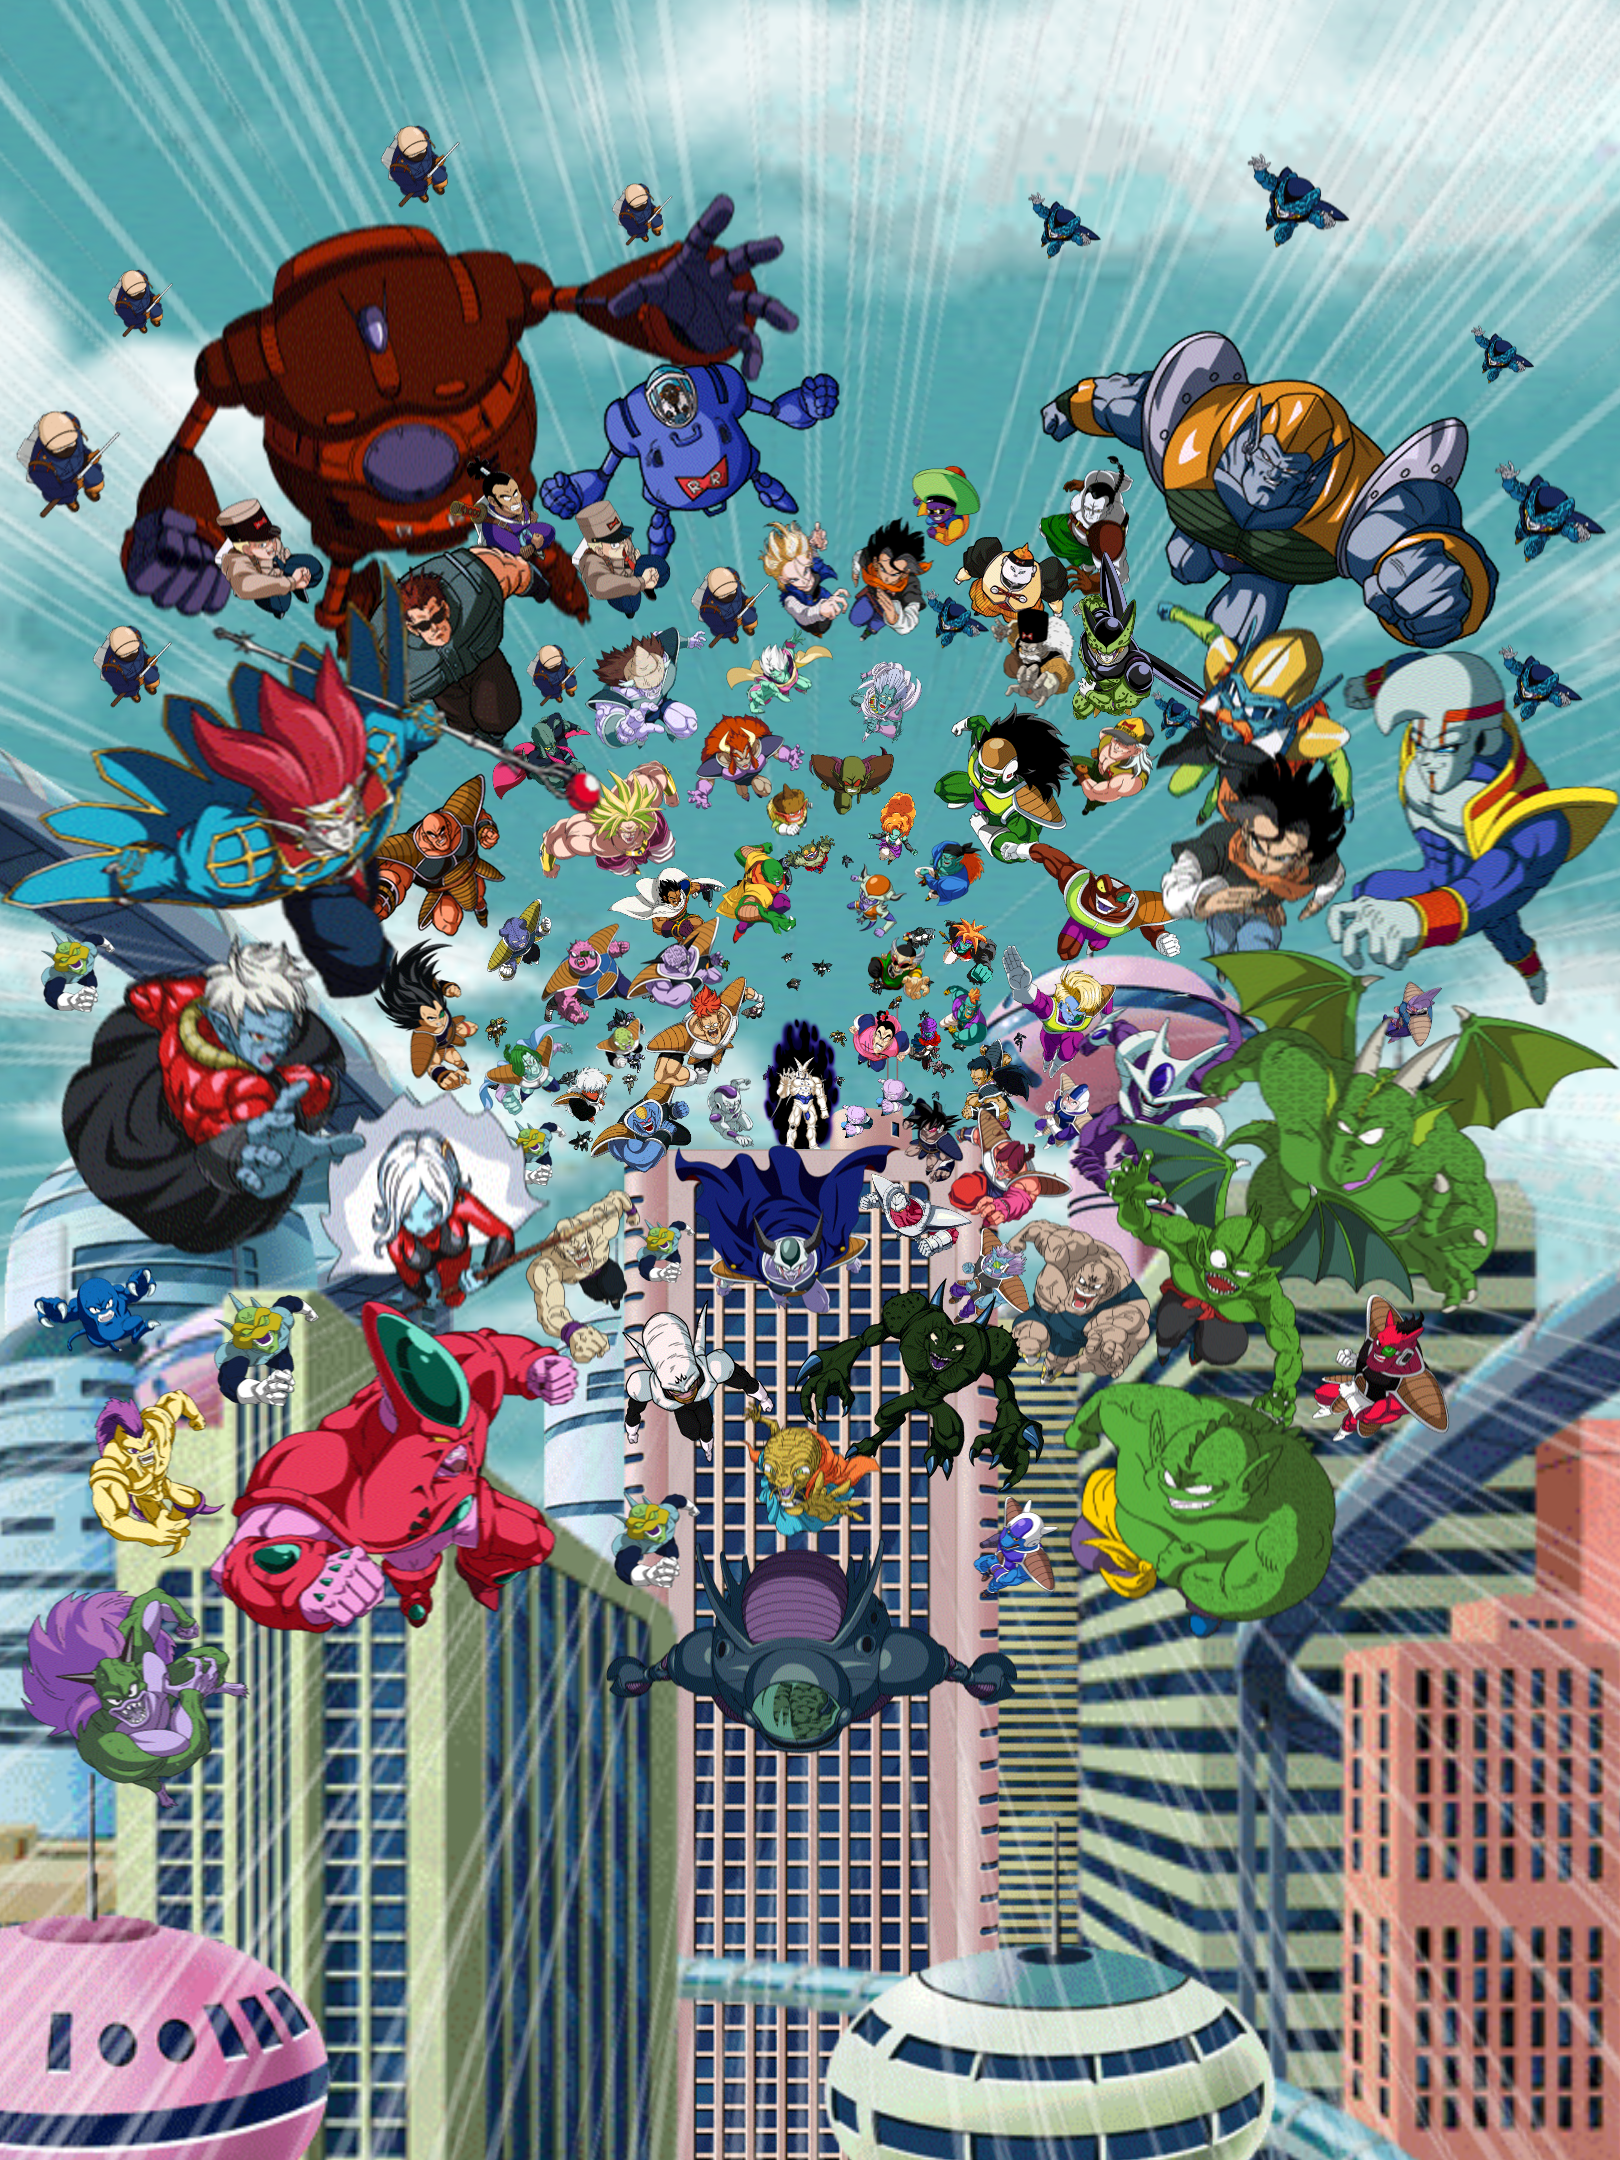 Dragon Ball GT Baby Saga Poster 1/3 by RCM2 on DeviantArt